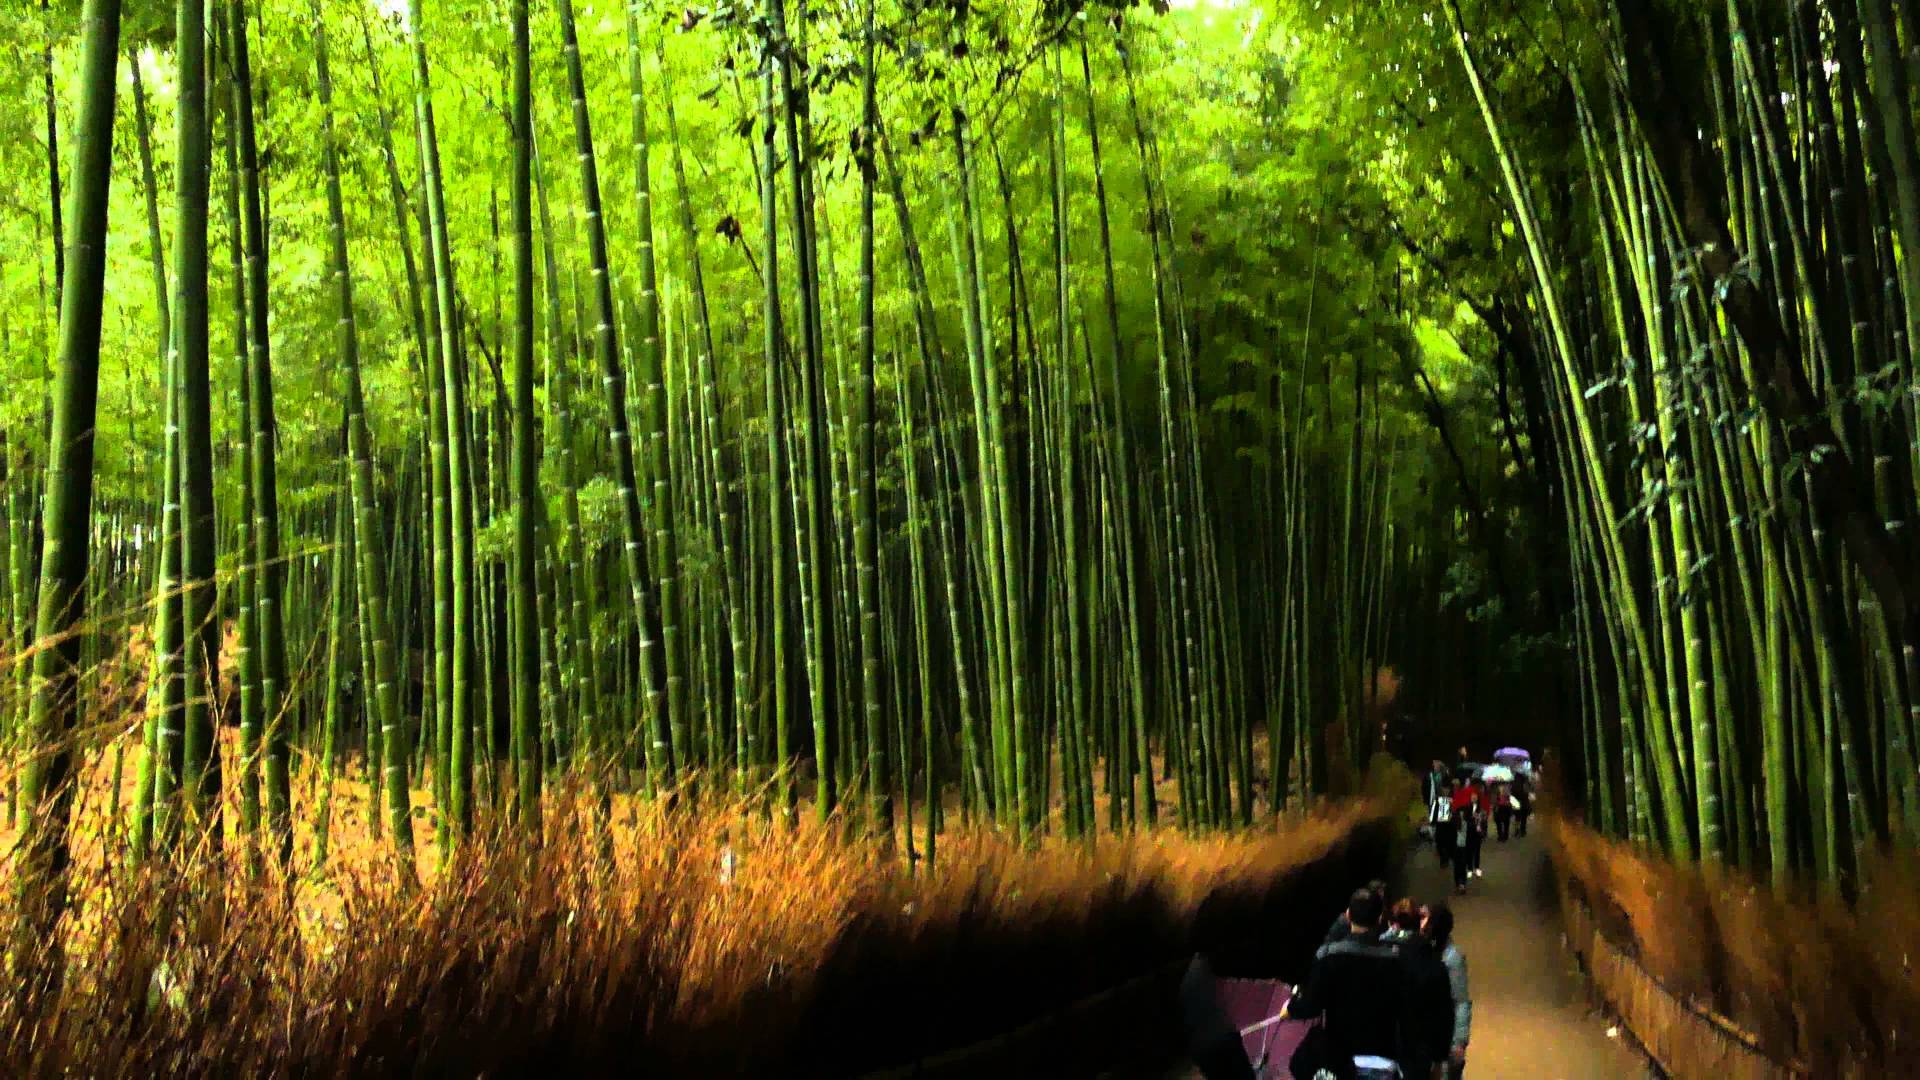 Bamboo Grove Wallpaper. Bamboo Forest Wallpaper 21 2559 X 1571 Imgnooz